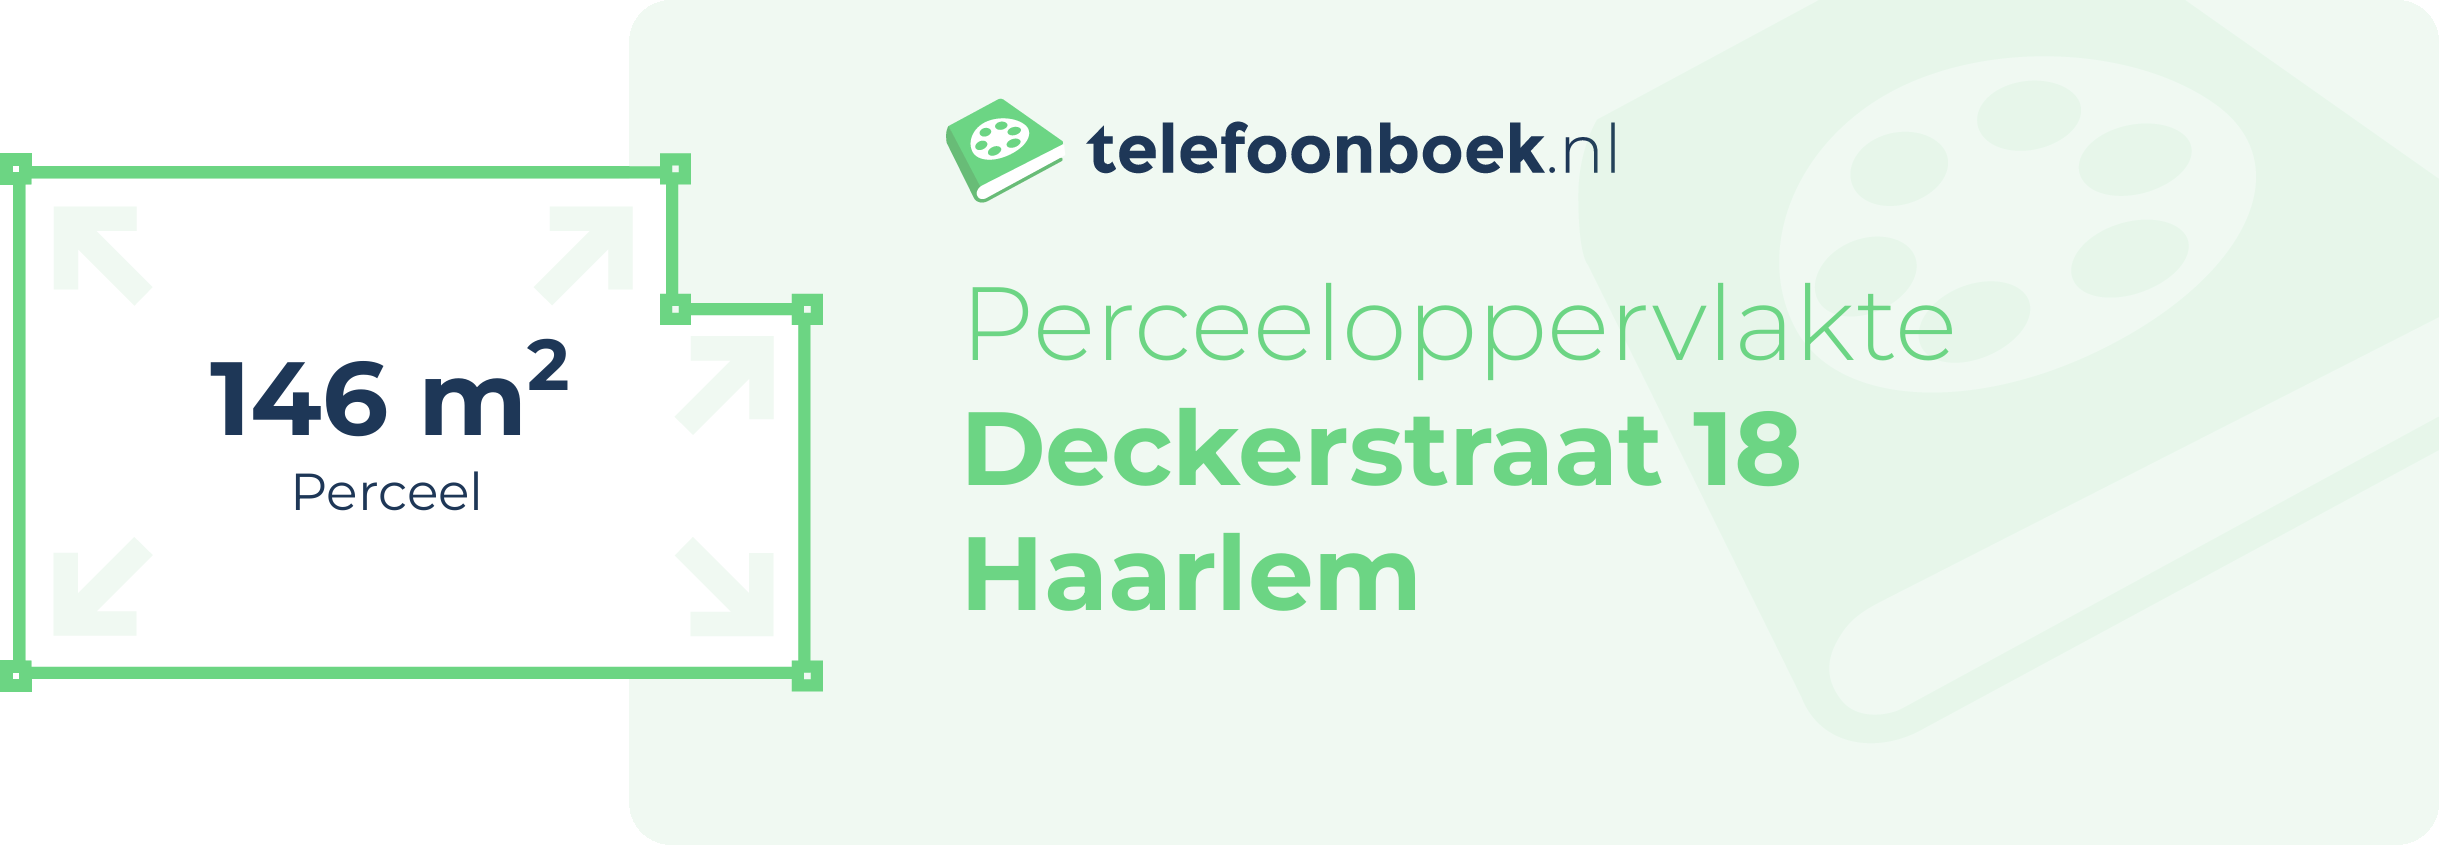 Perceeloppervlakte Deckerstraat 18 Haarlem